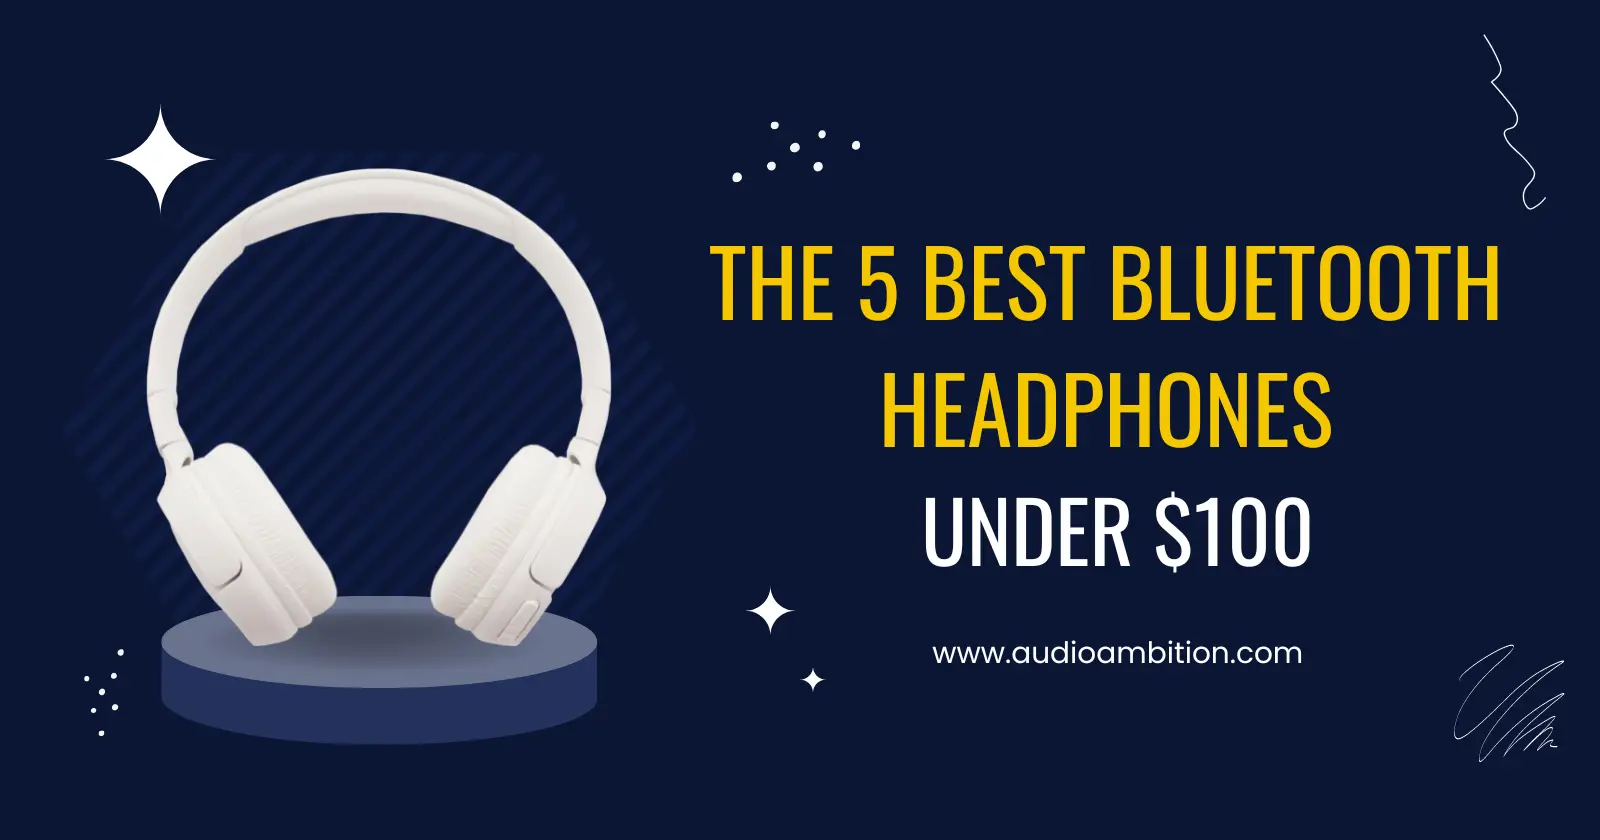 The 5 Best Bluetooth Headphones Under $100